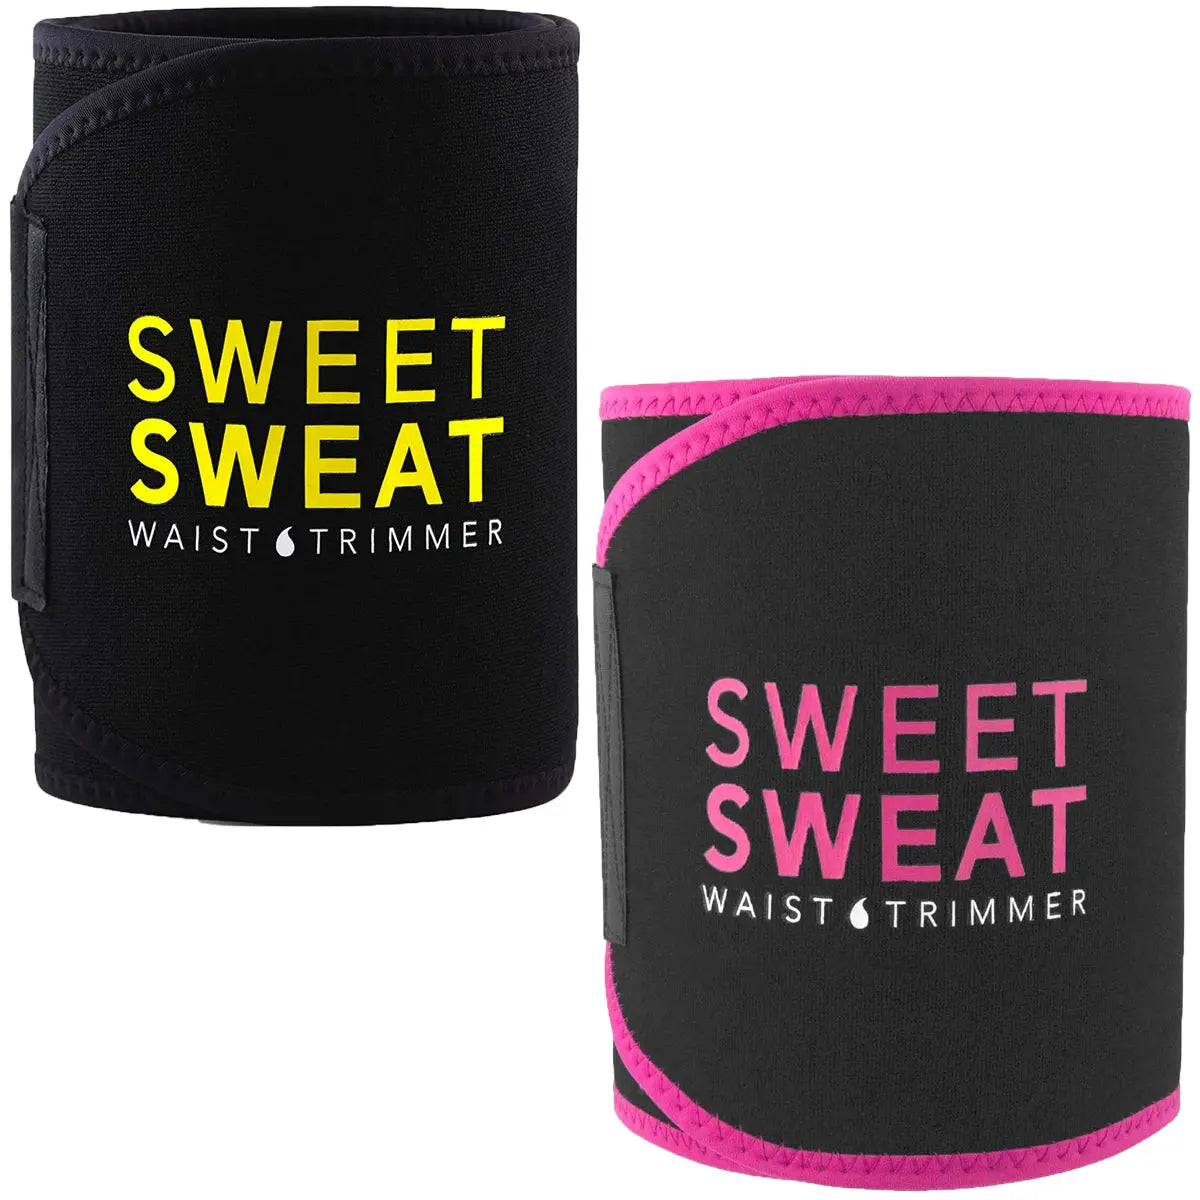 Sports Research Sweet Sweat Waist Trimmer Belt - Medium Sports Research